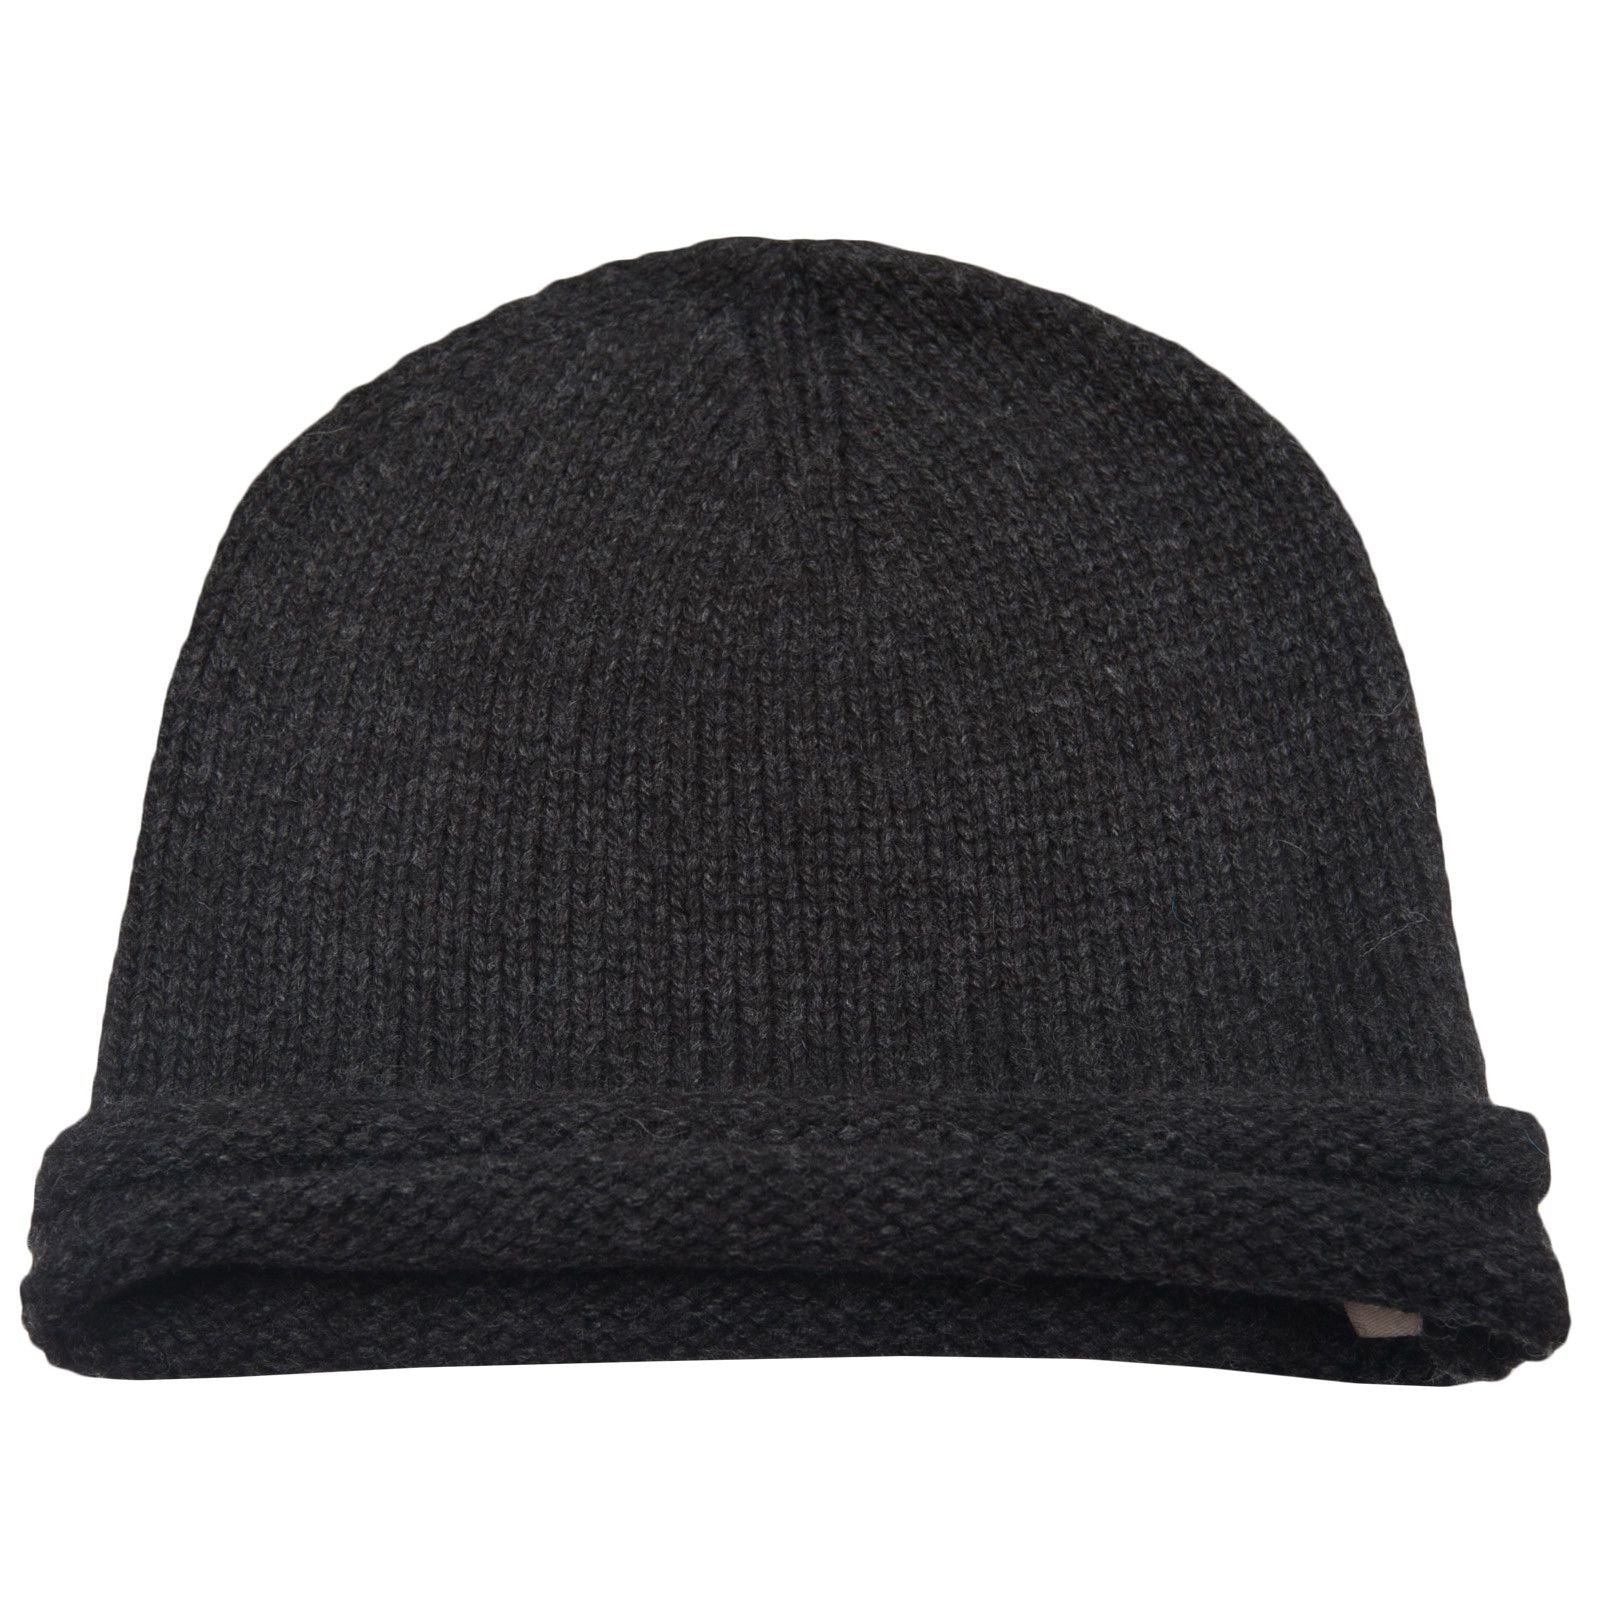 Boys Black Knitted Wool Hat - CÉMAROSE | Children's Fashion Store - 1